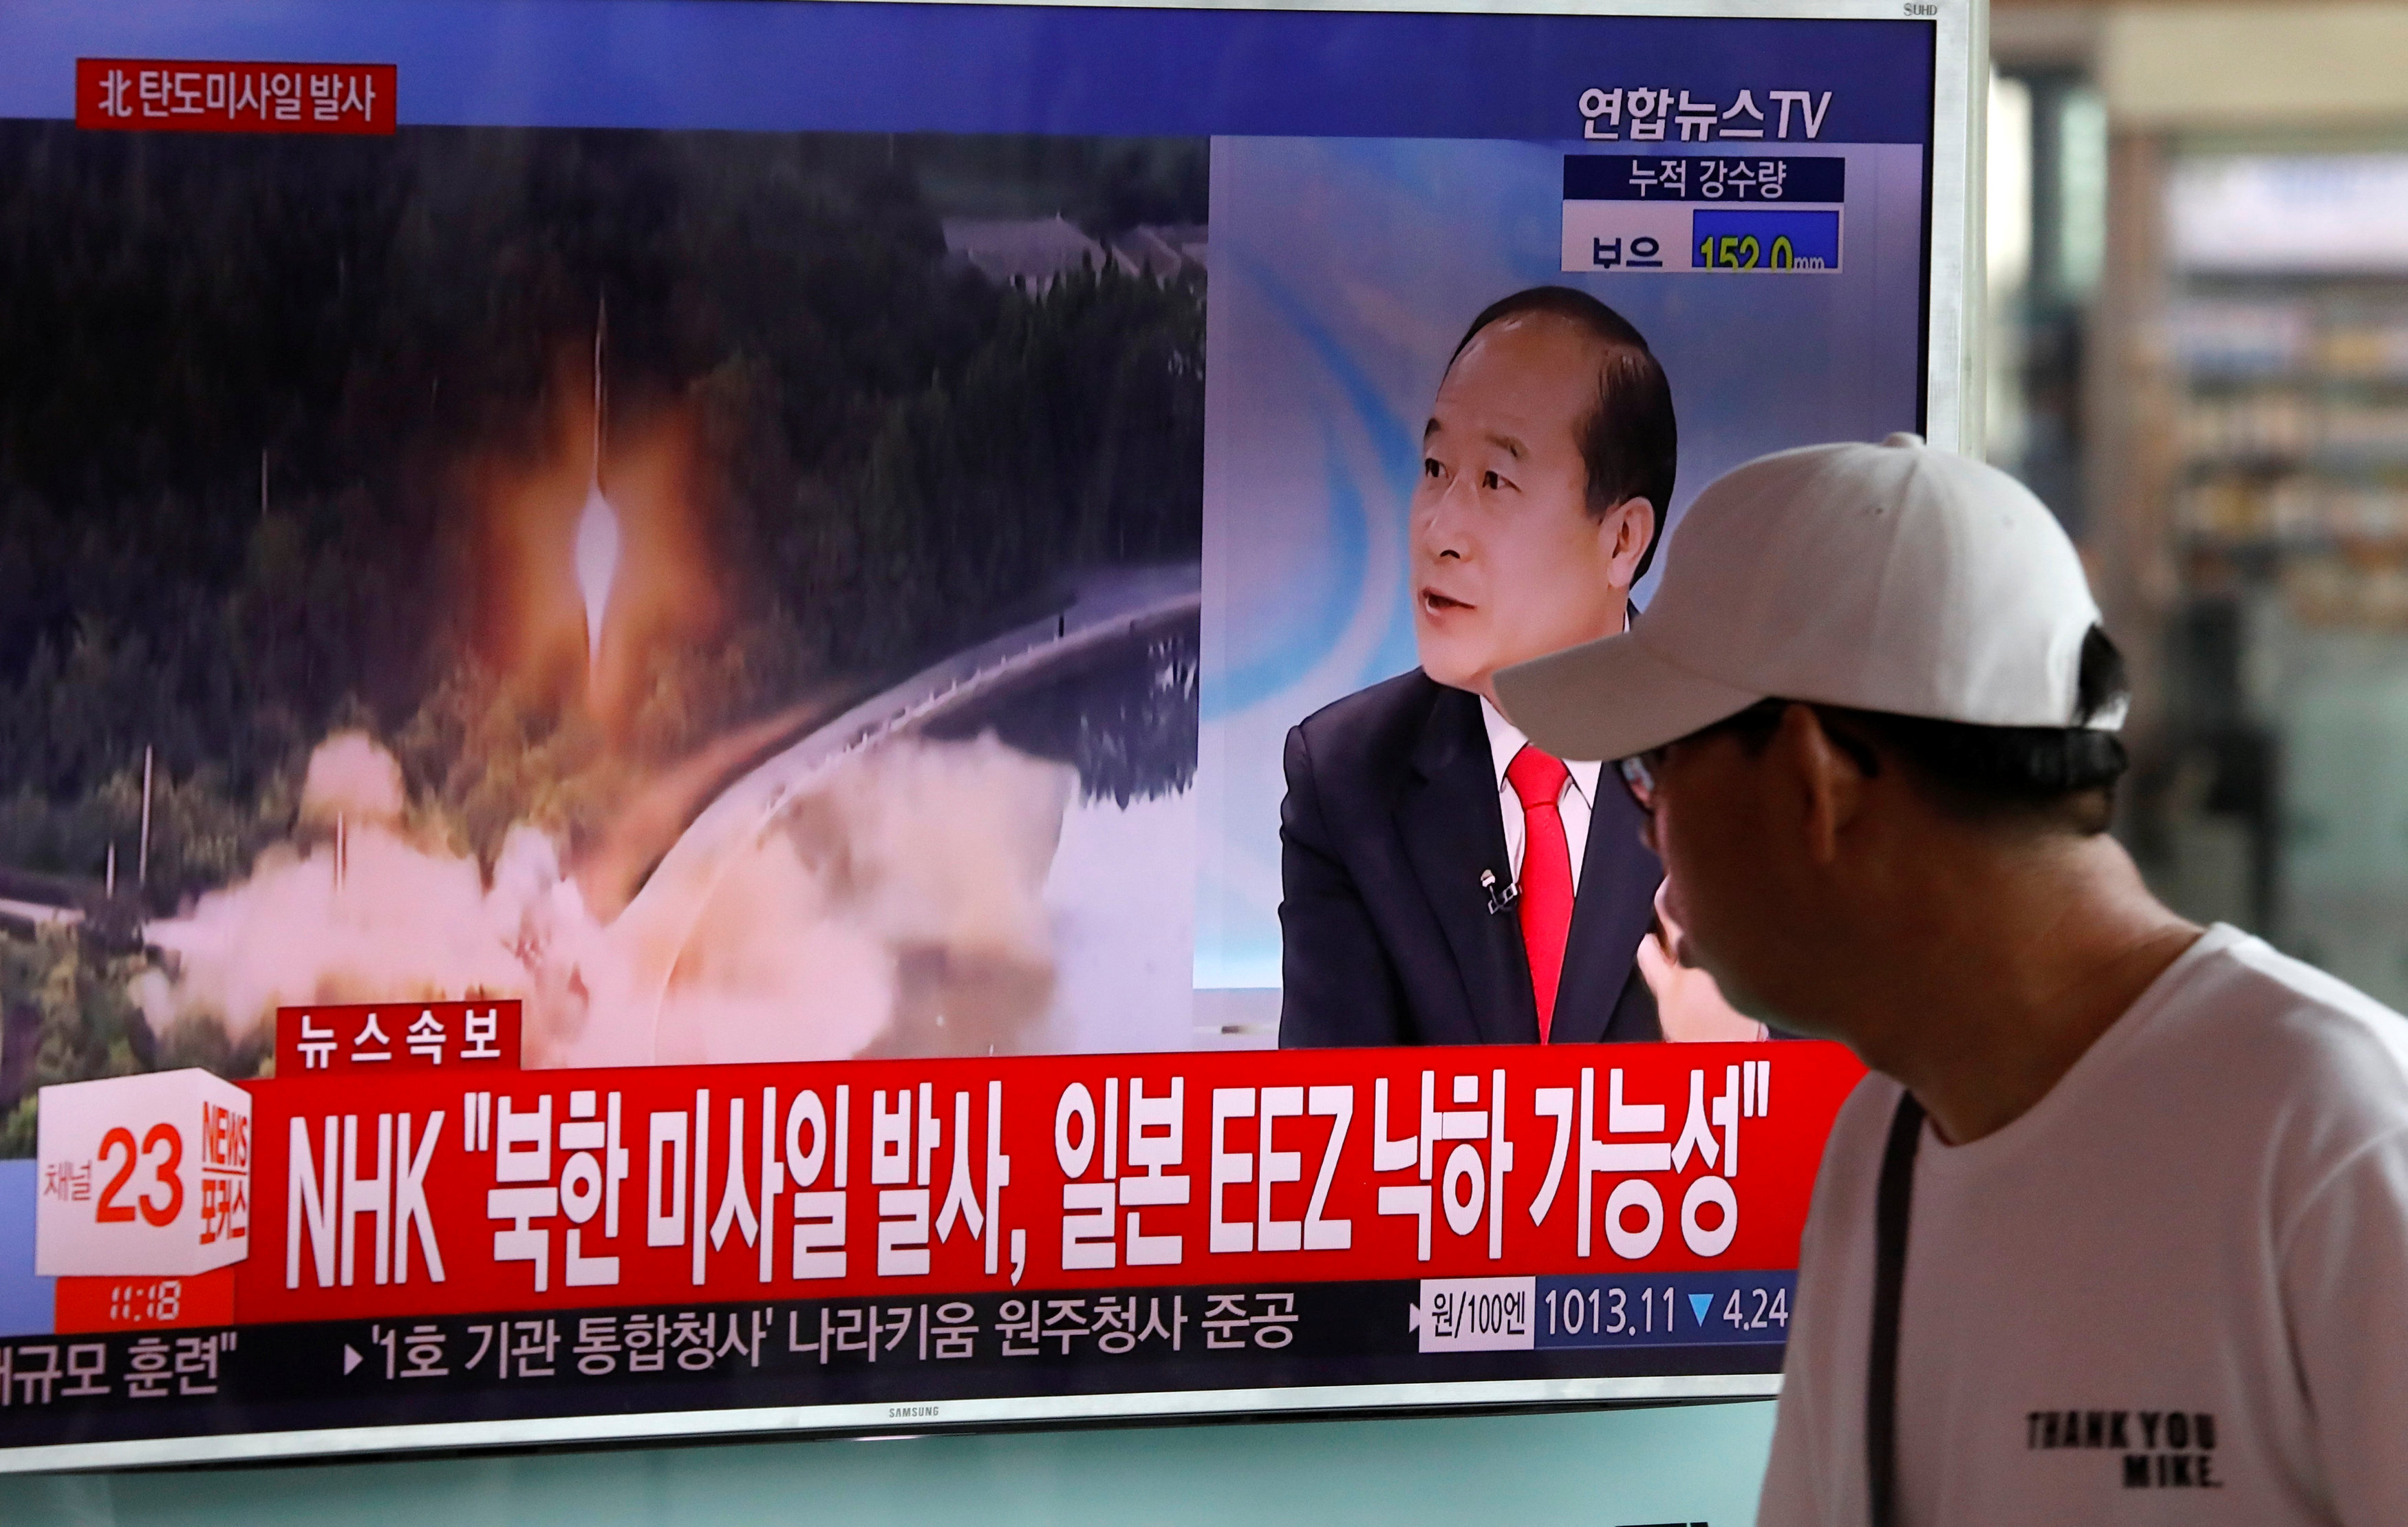 Intercontinental ballistic missile test successful, says North Korea